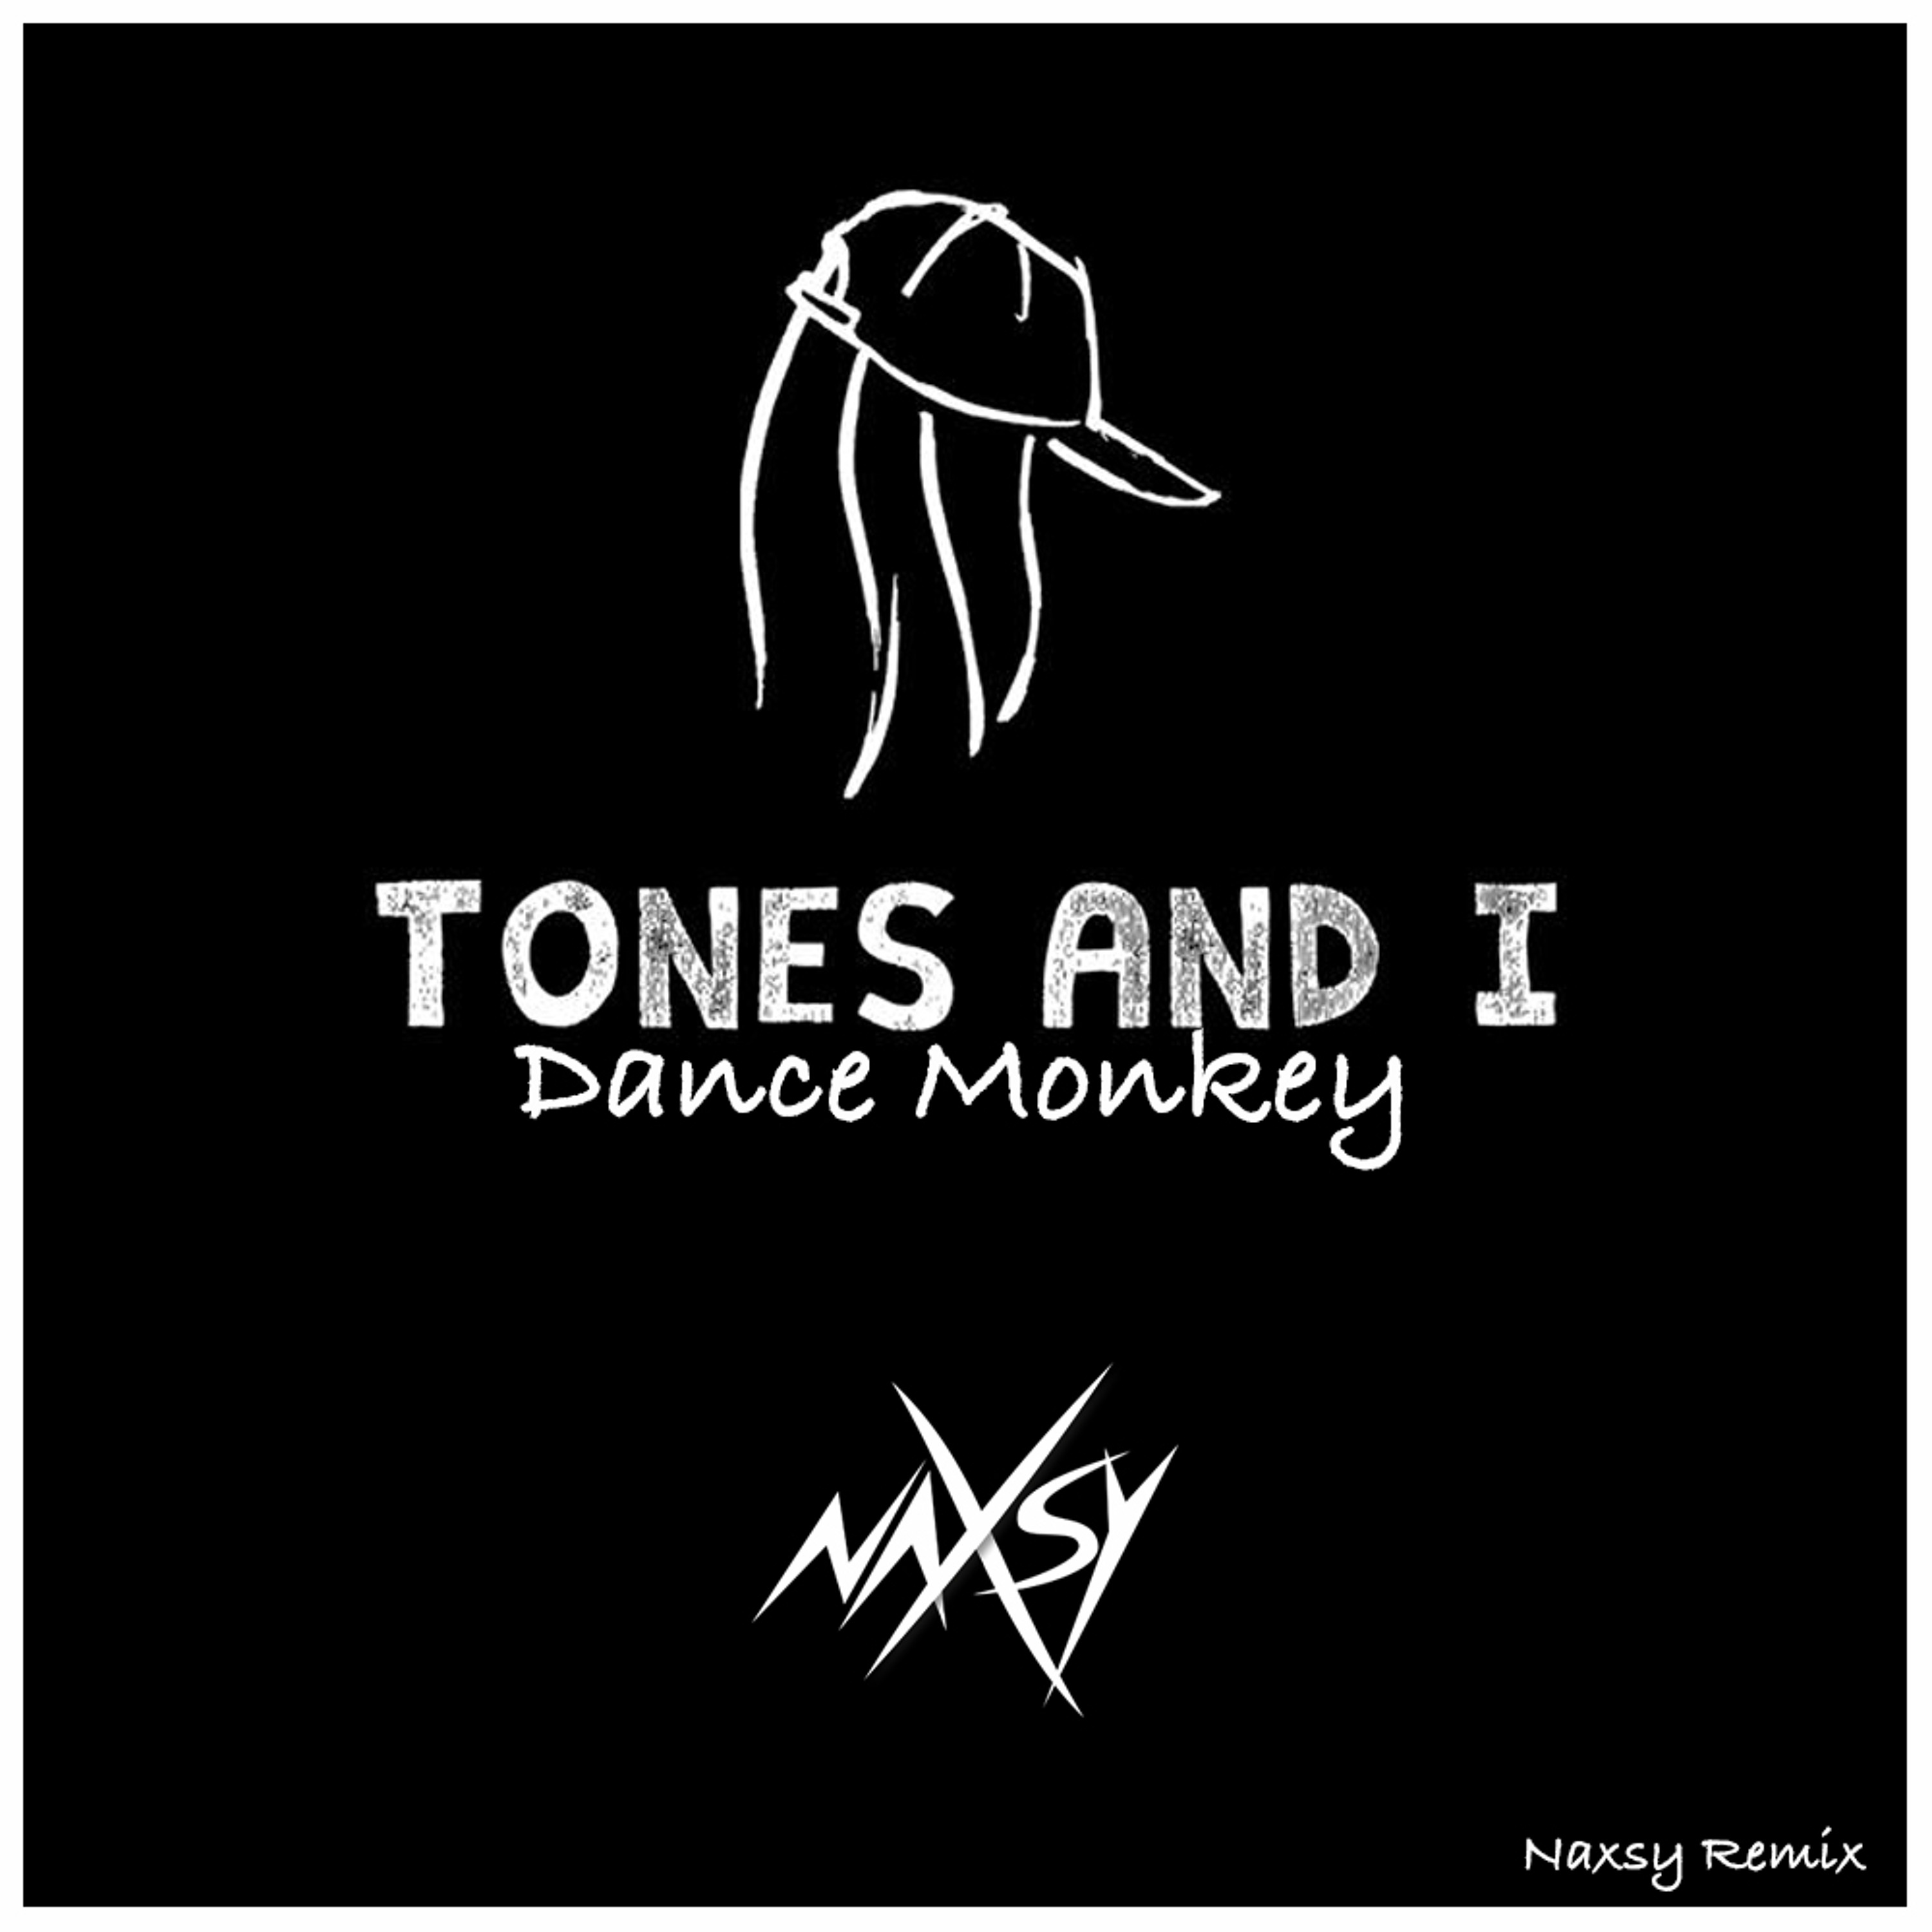 Monkey песня слушать. Tones Dance Monkey. Tones and i Dance Monkey обложка. ТОНЕС энд данс МОНКЕЙ. Tones and i Dance.